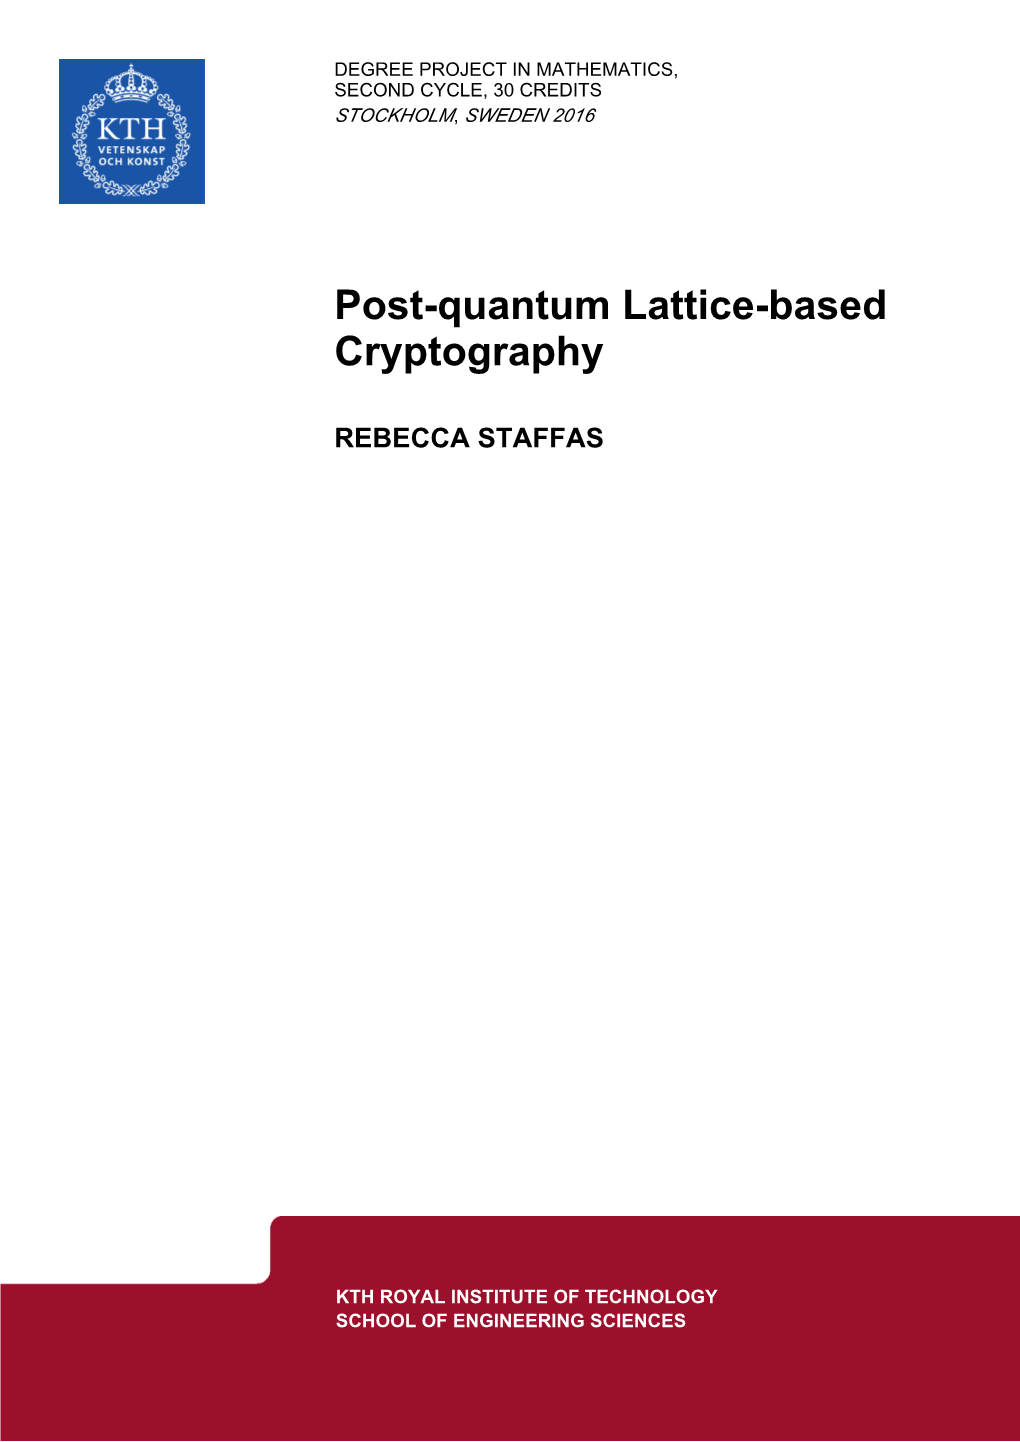 Post-Quantum Lattice-Based Cryptography